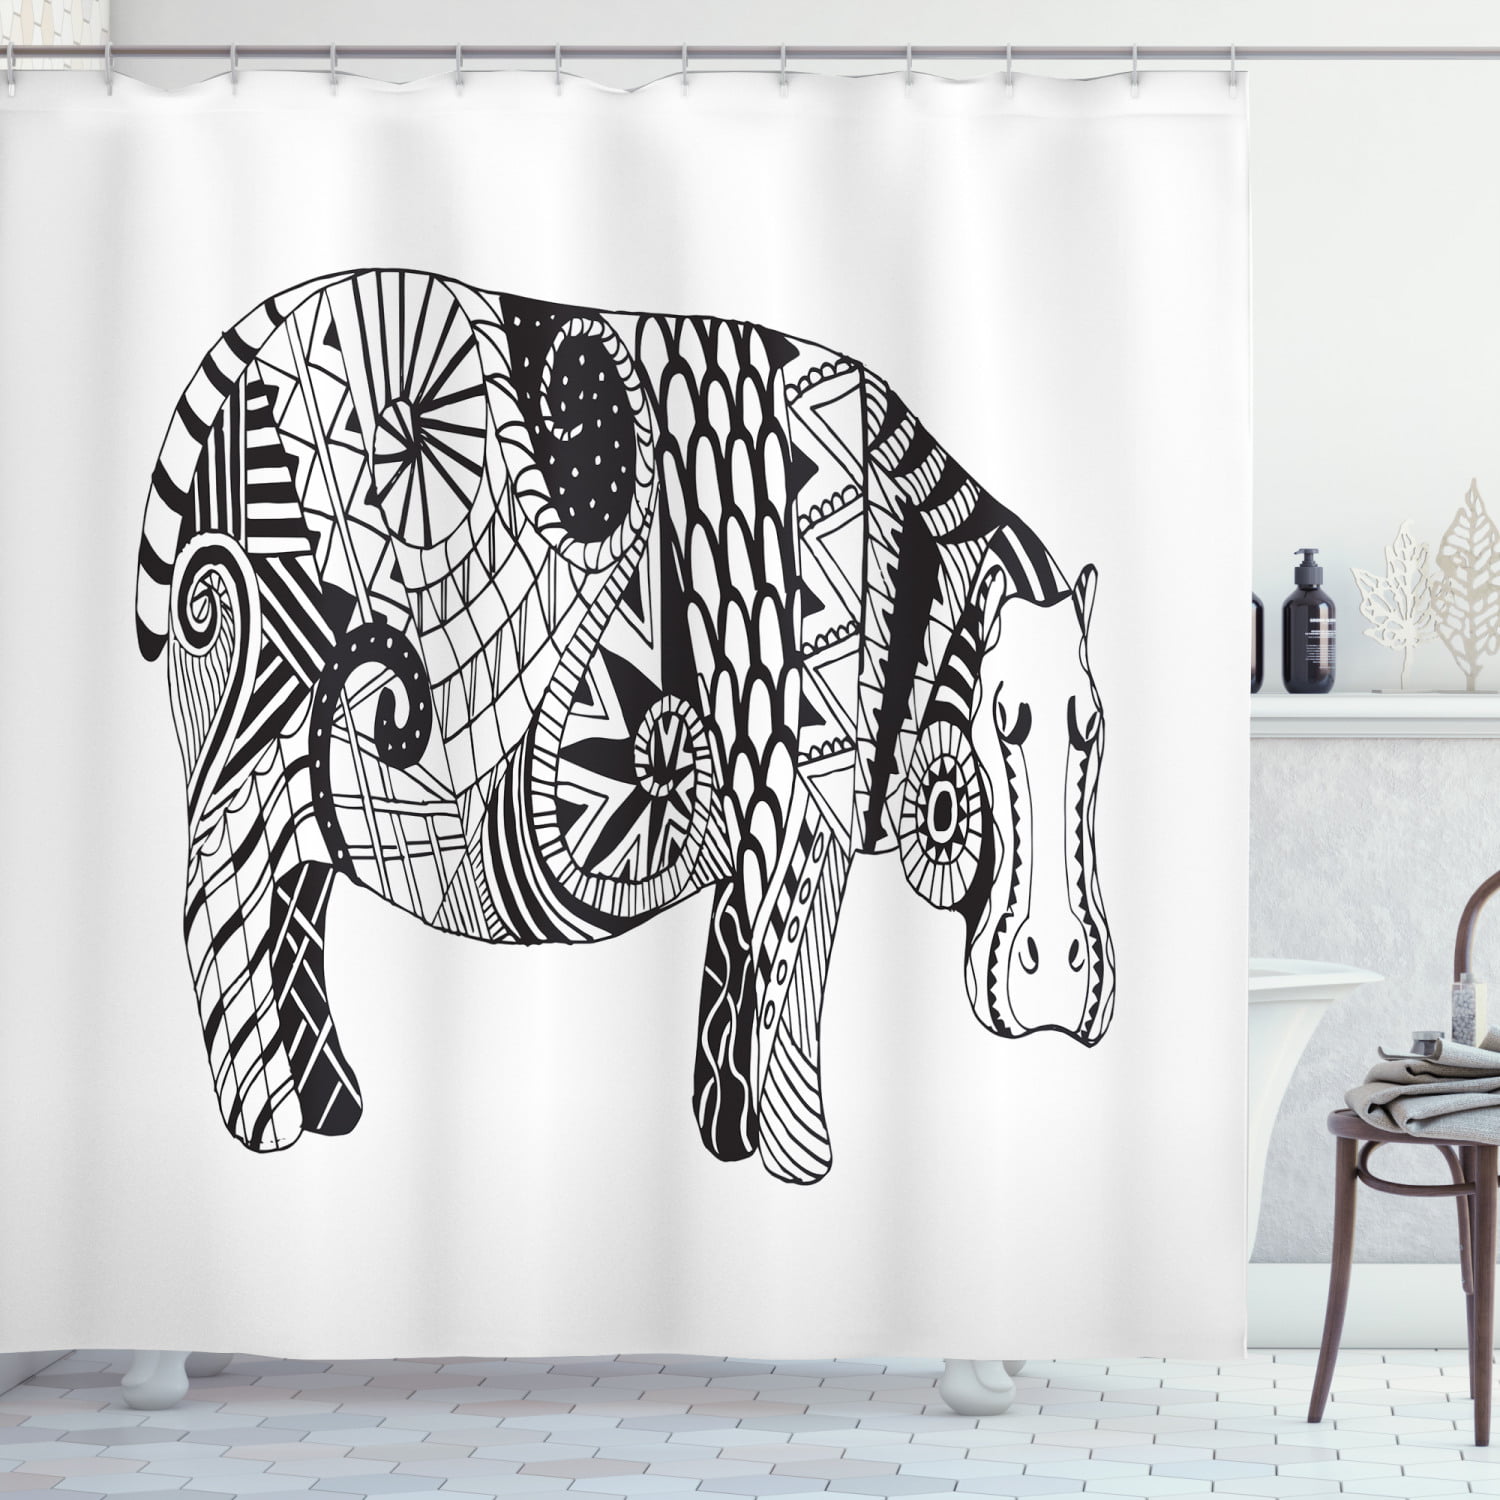 Hippo Shower Curtain Fabric Bathroom Decor Set with Hooks 4 Sizes